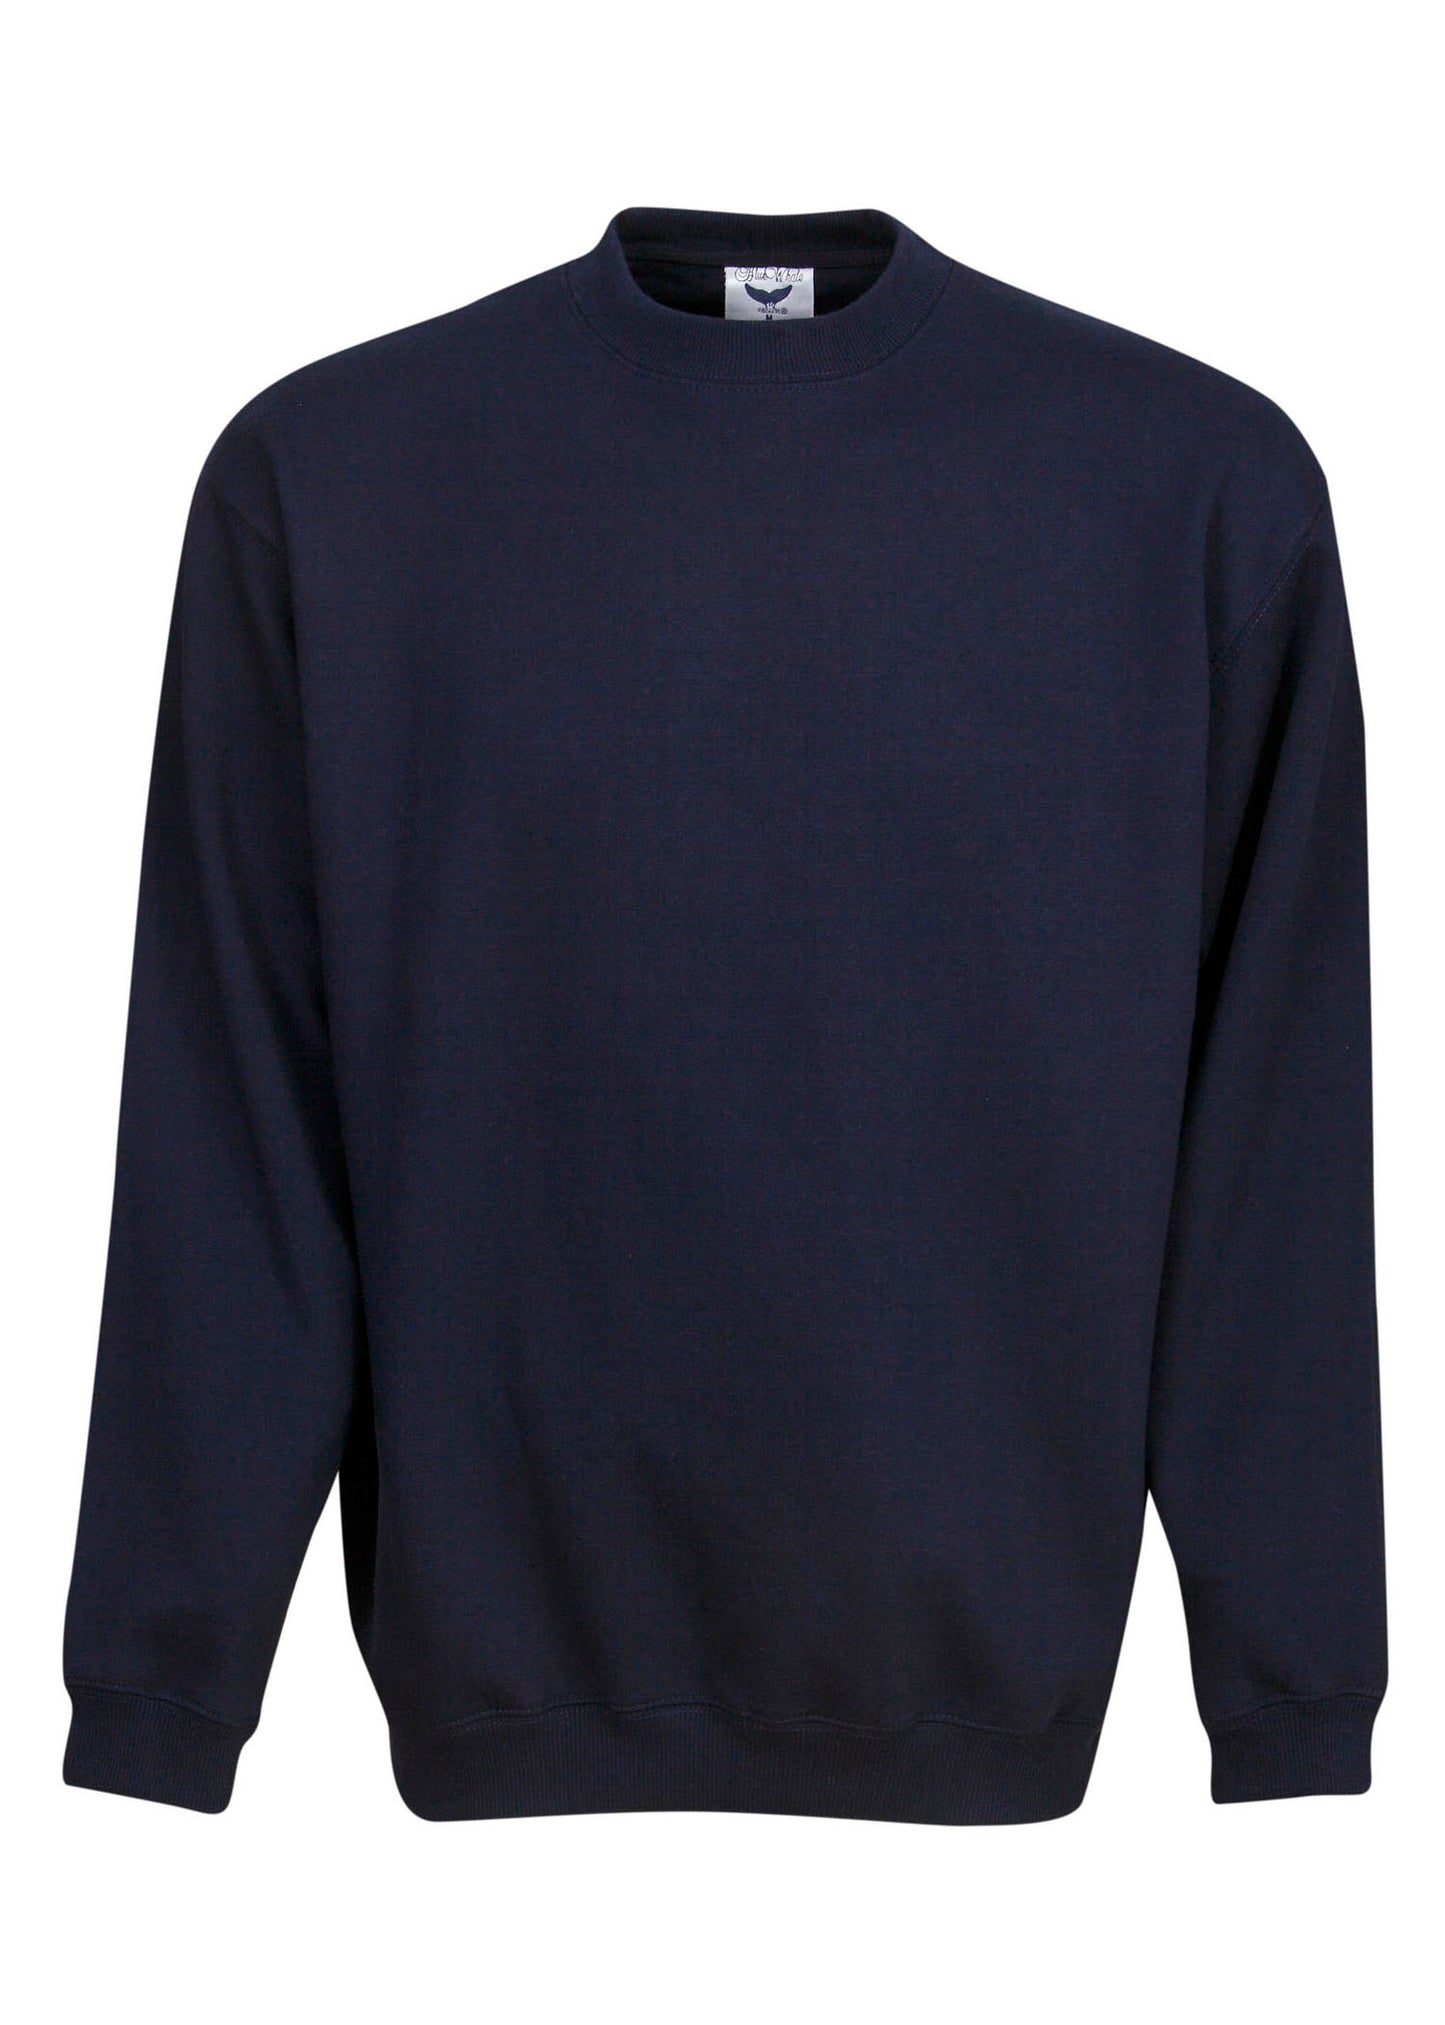 Blue Whale Unisex Traditional Fleecy Sloppy Joe Sweatshirt